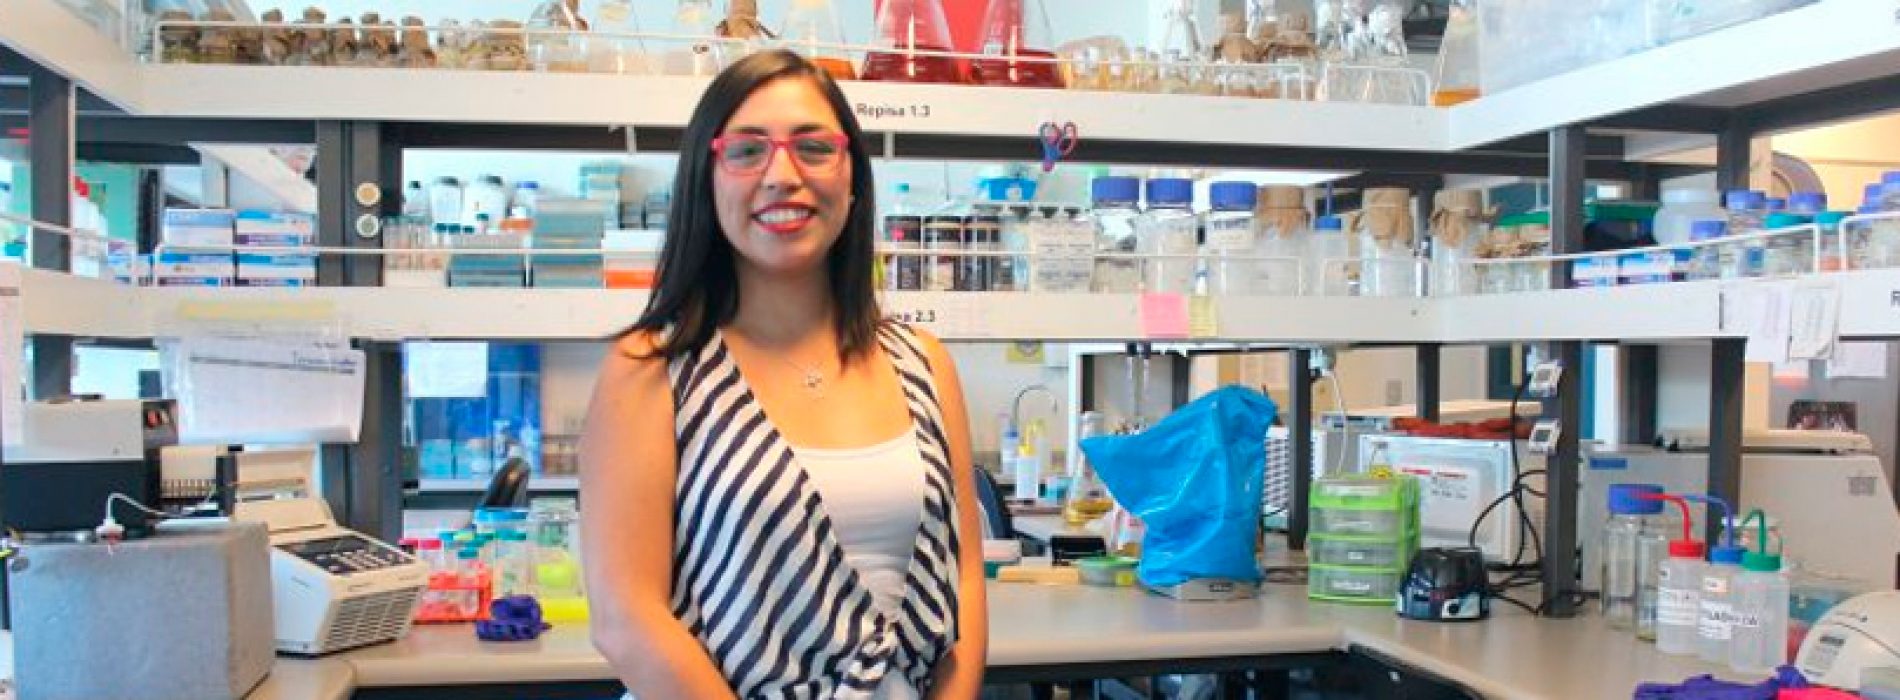 Francesca Burgos, Posdoctorada of Biochemistry, obtained prestigious PEW Fellowship for Latin American scholars in Biomedical Sciences